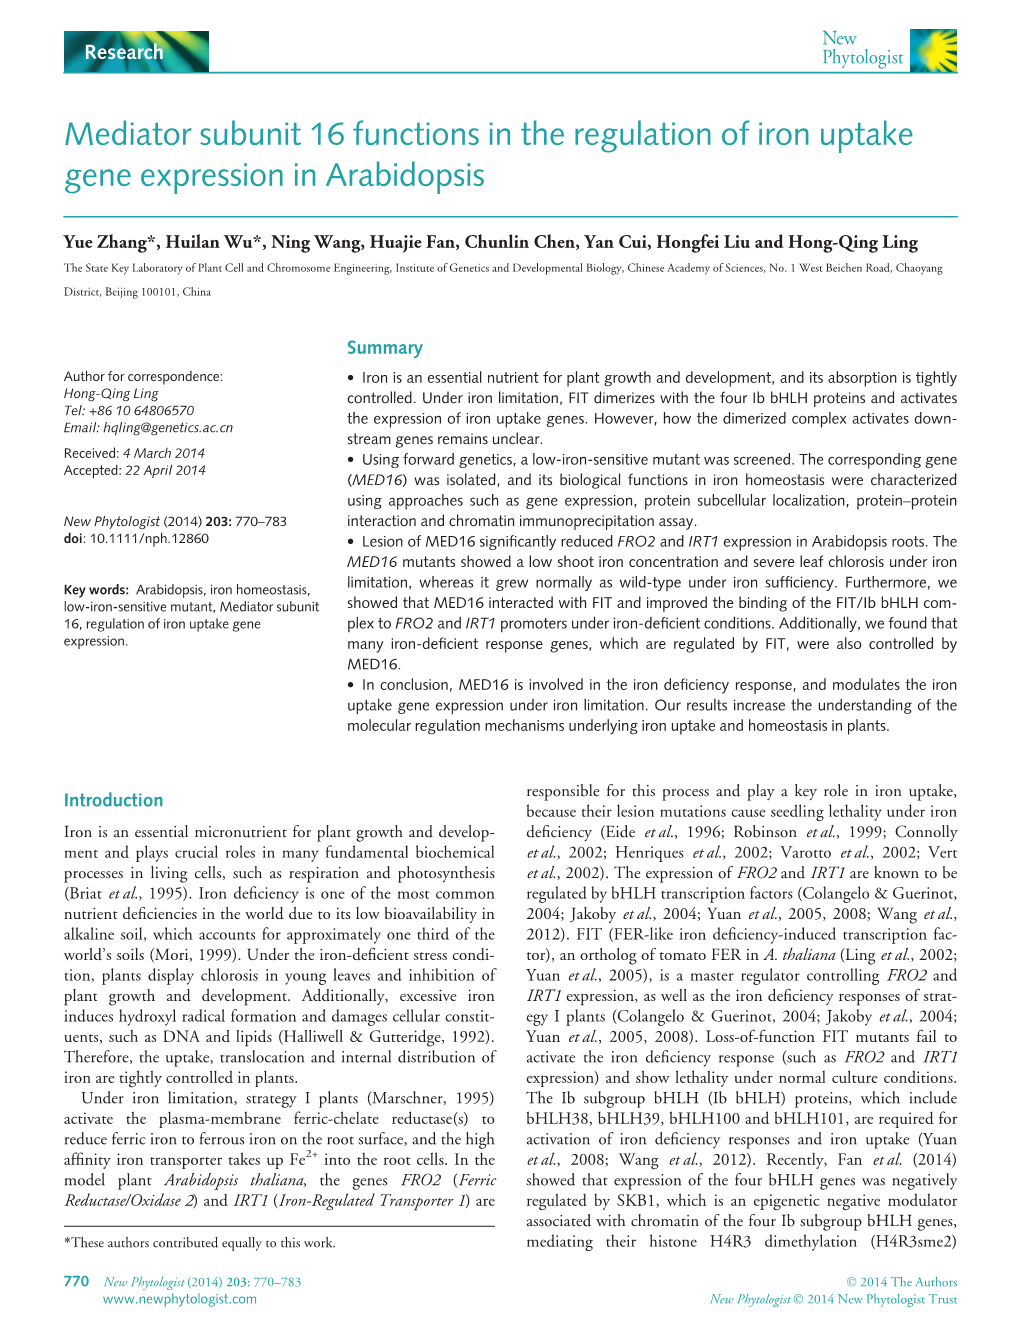 Mediator Subunit 16 Functions in the Regulation of Iron Uptake Gene Expression in Arabidopsis